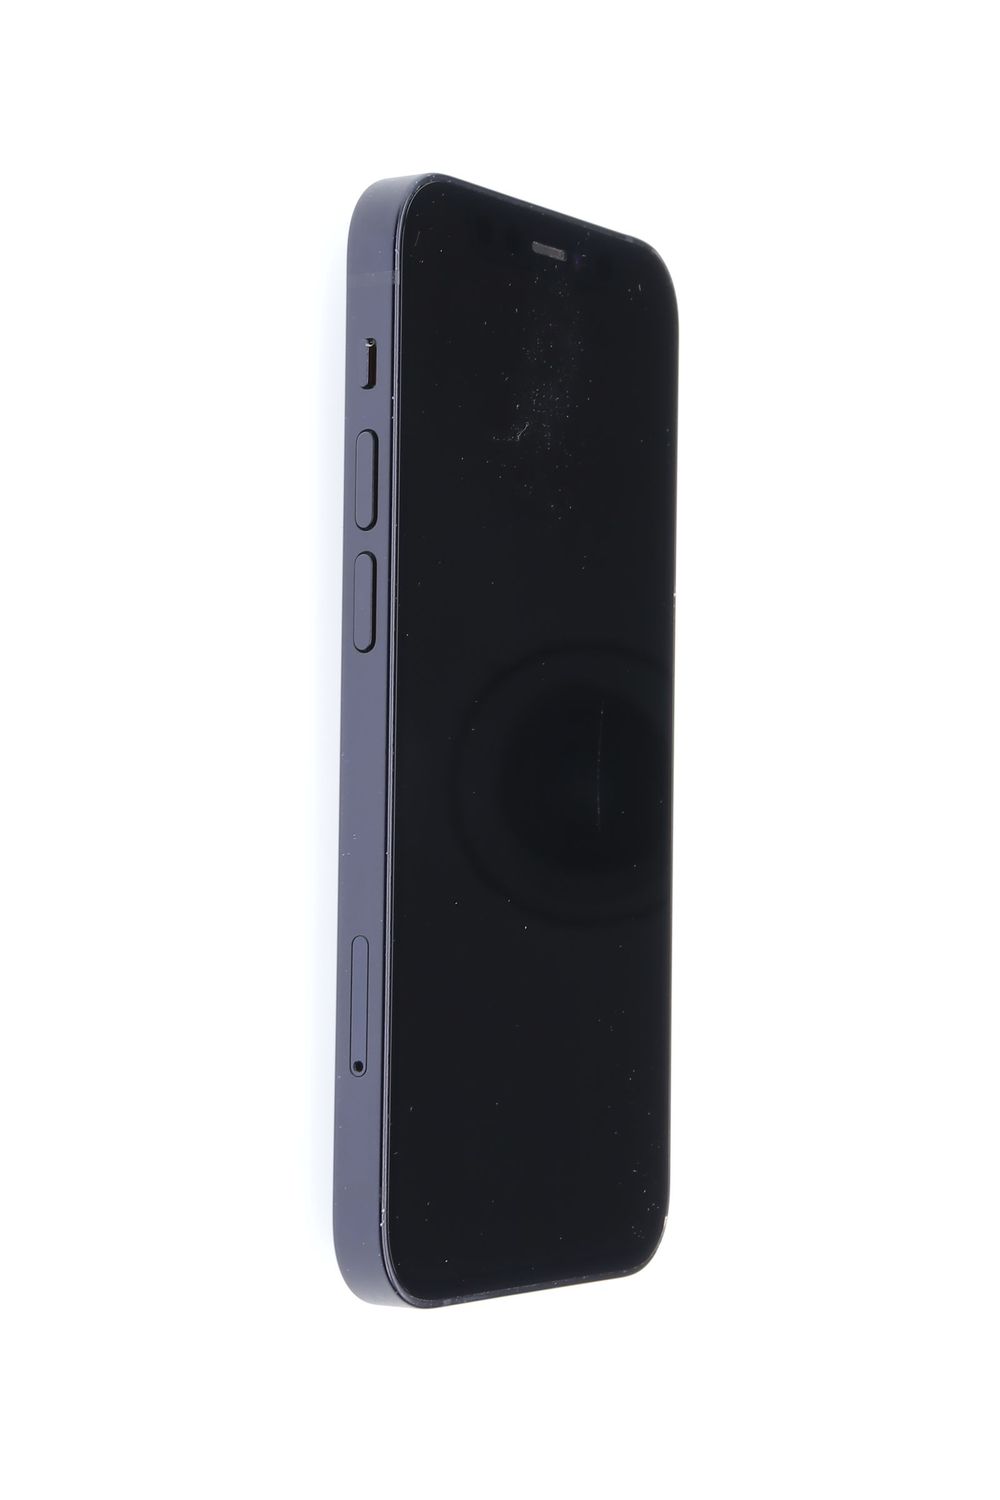 Telefon mobil Apple iPhone 12 mini, Black, 128 GB, Foarte Bun